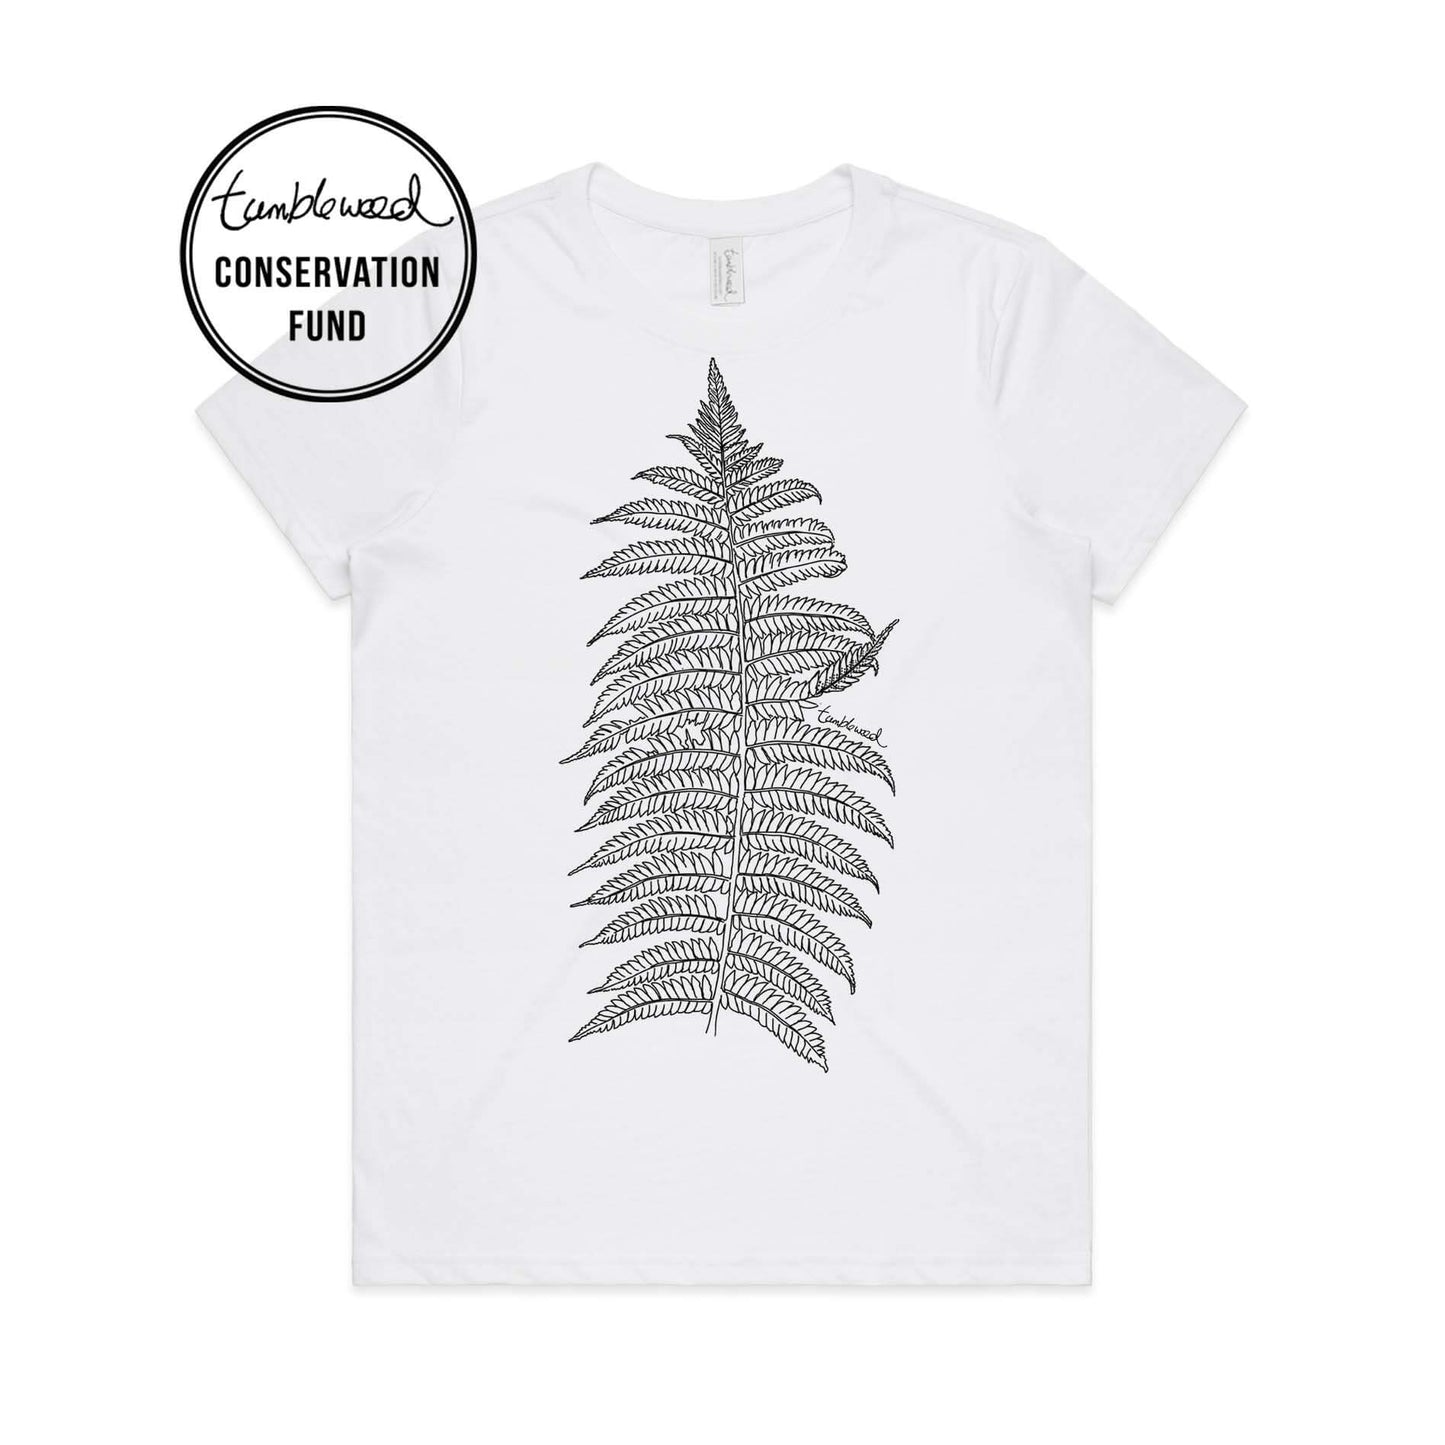 Silver fern/ponga T-shirt